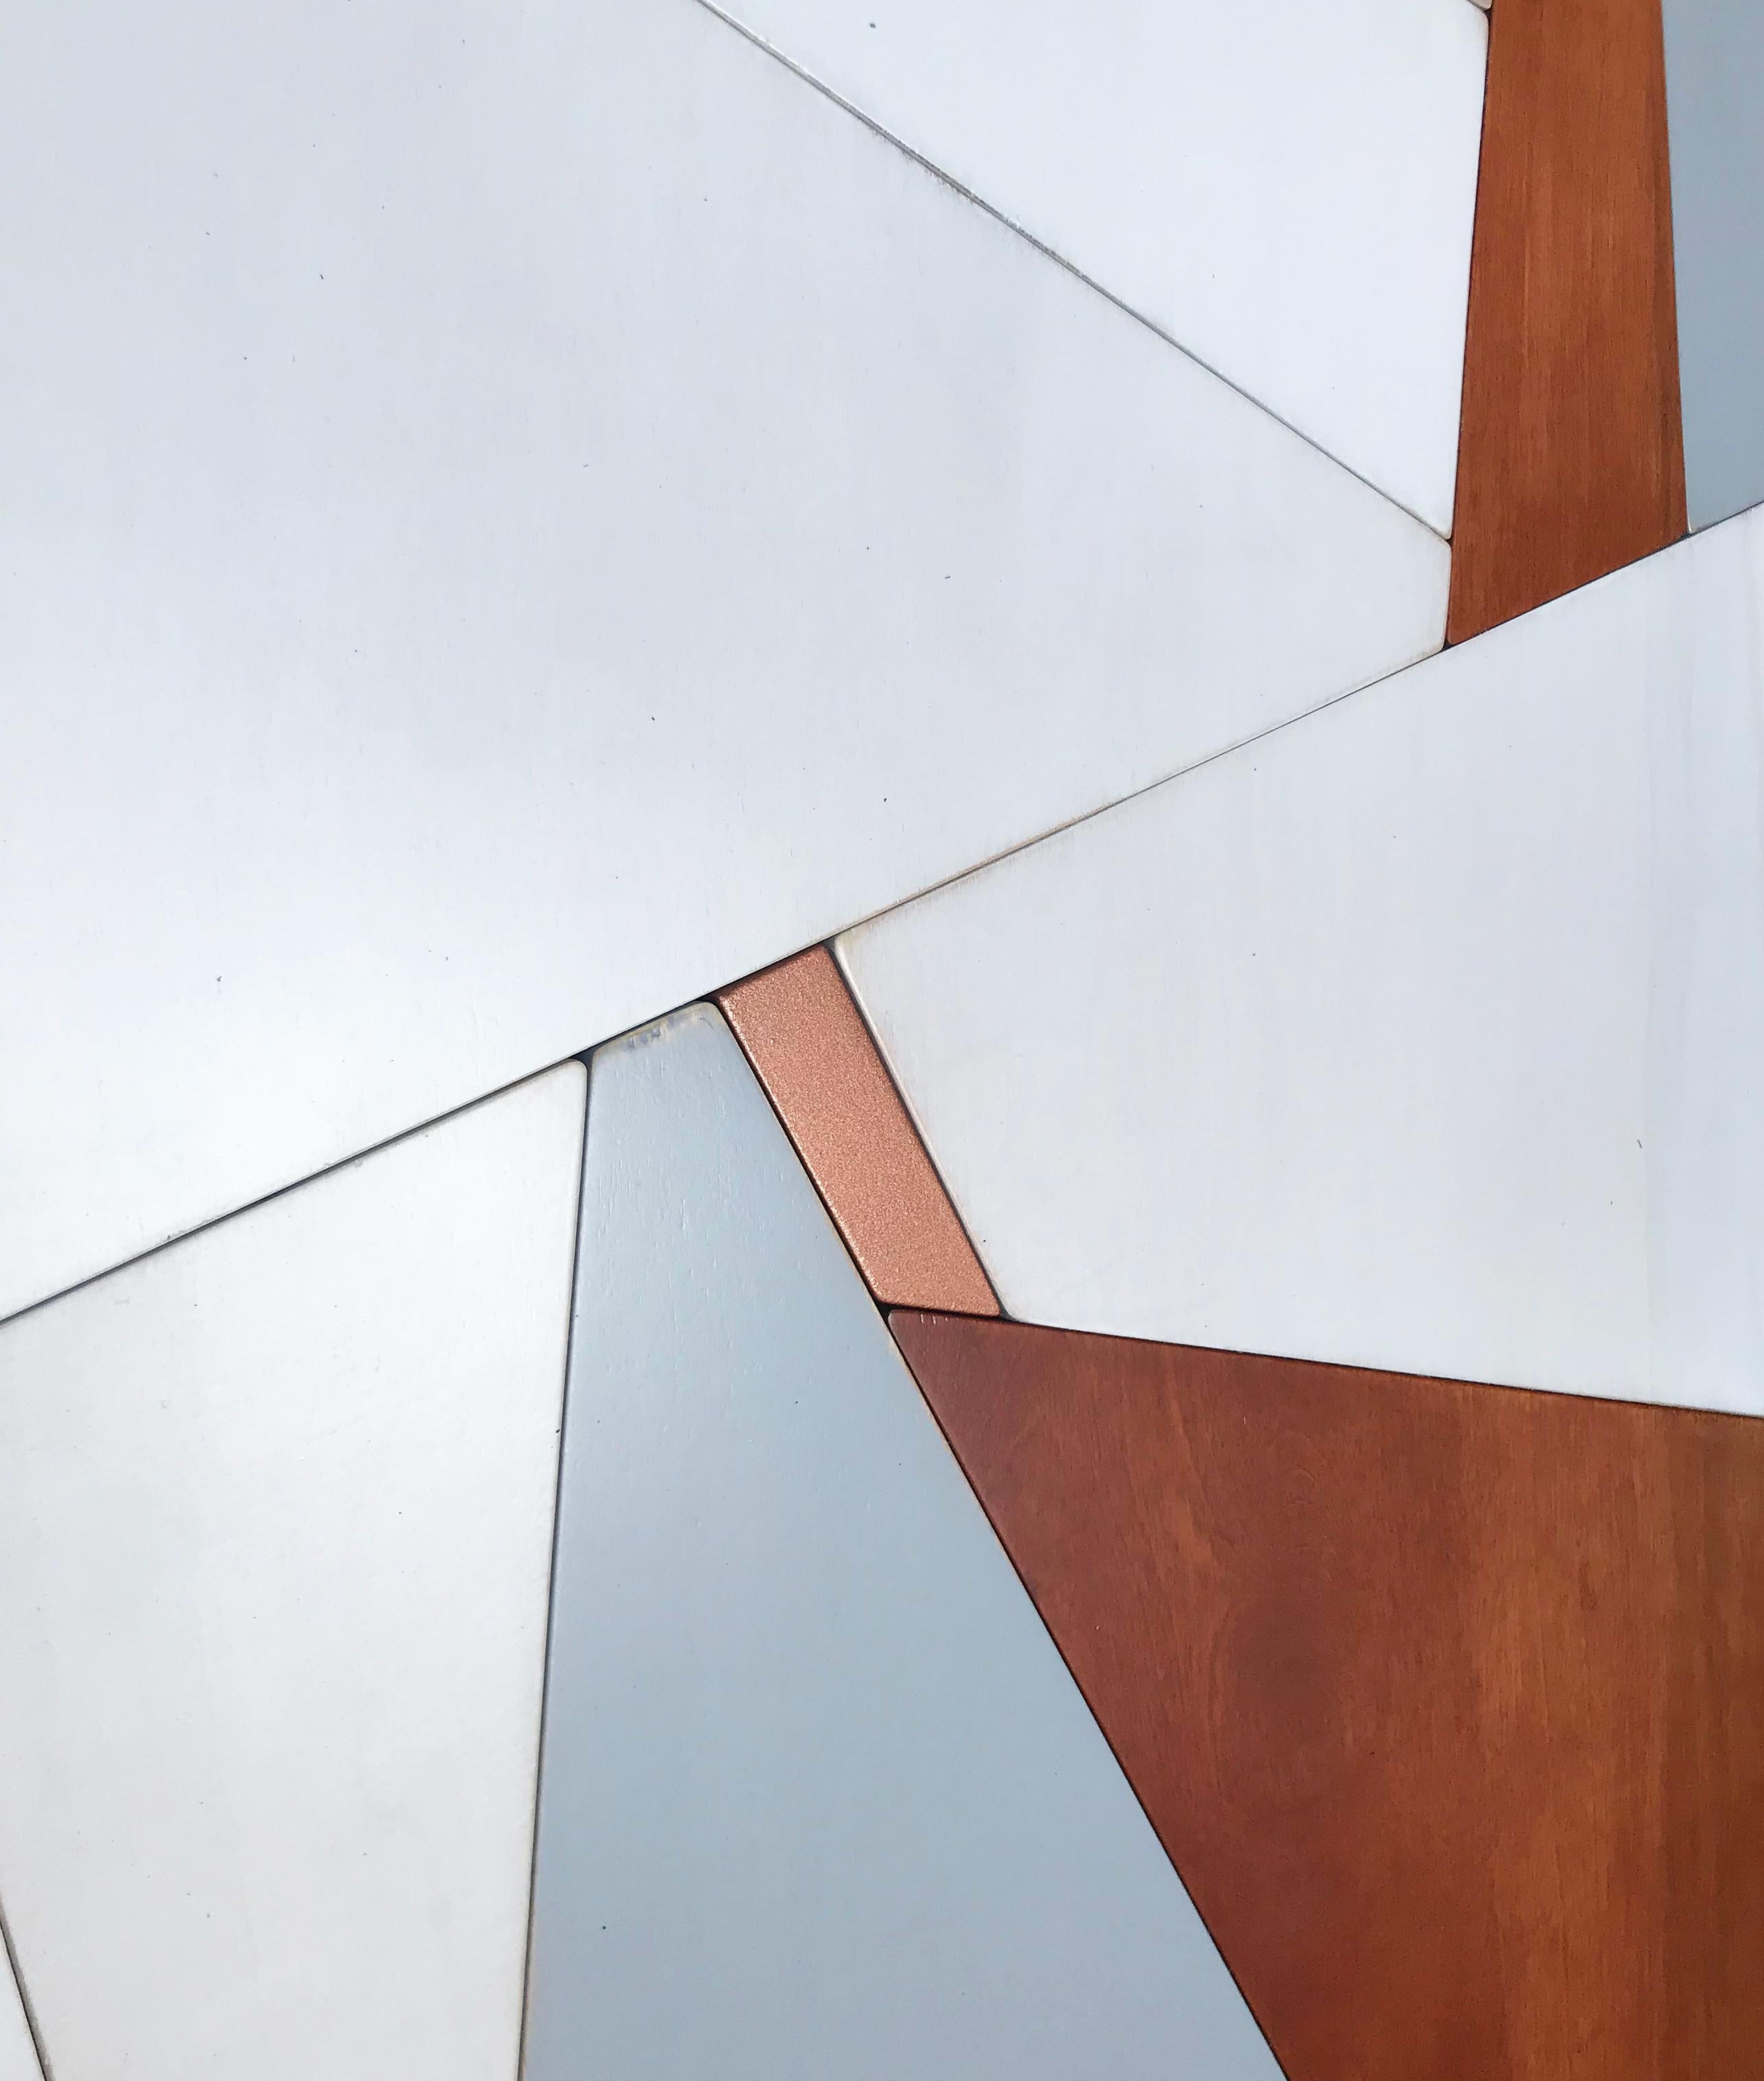 Holocene (tondo copper circular modern wall sculpture abstract geometric art) - Sculpture by Scott Troxel